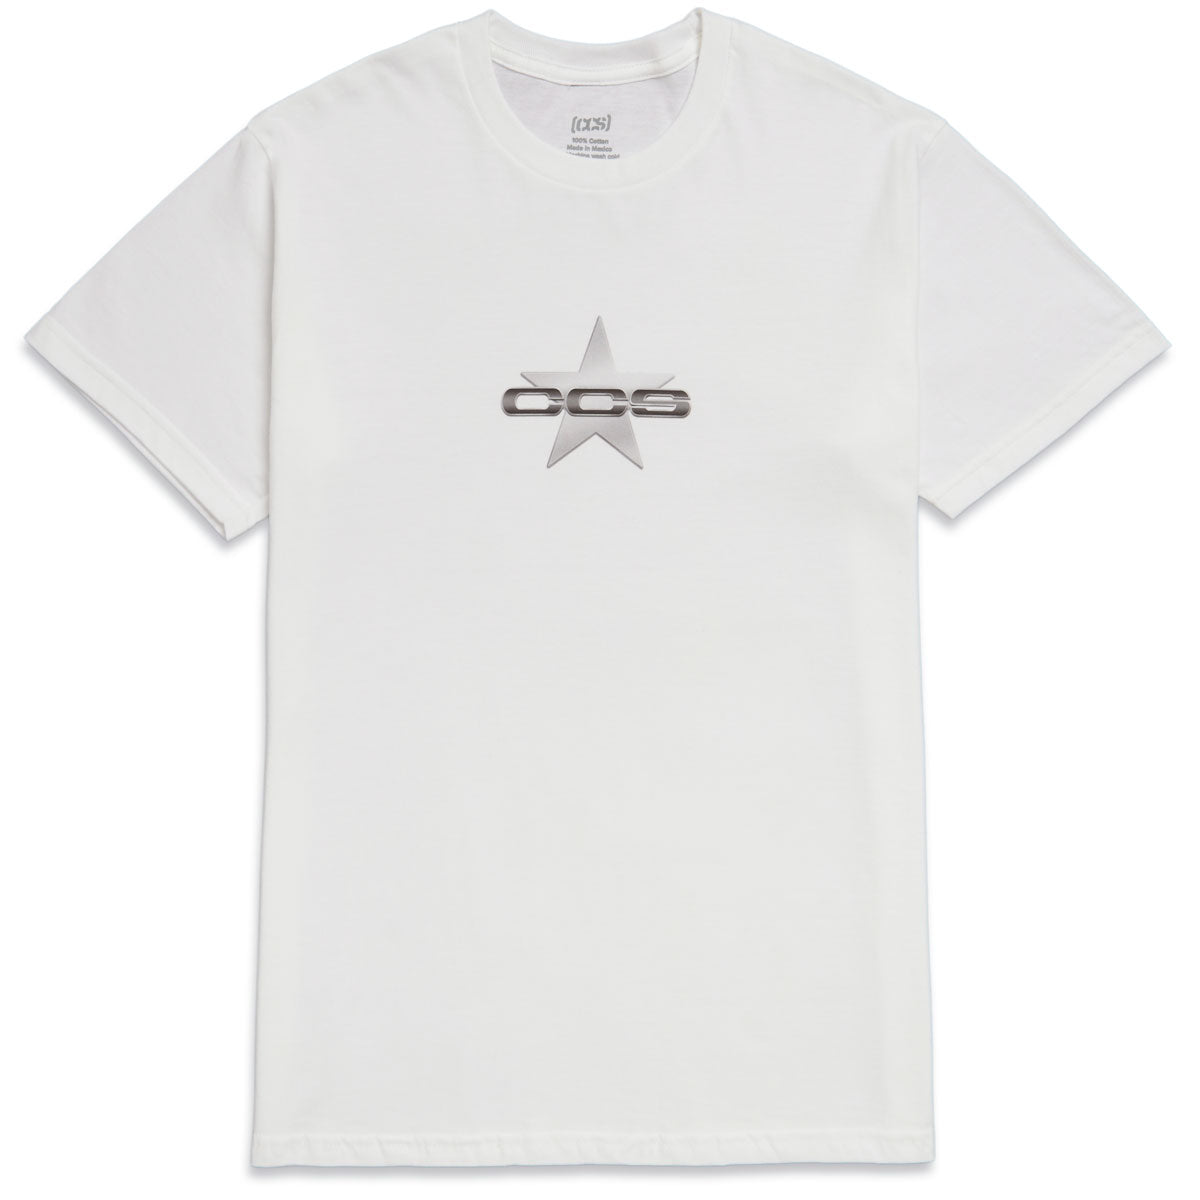 CCS 97 Star T-Shirt - White - SM image 1